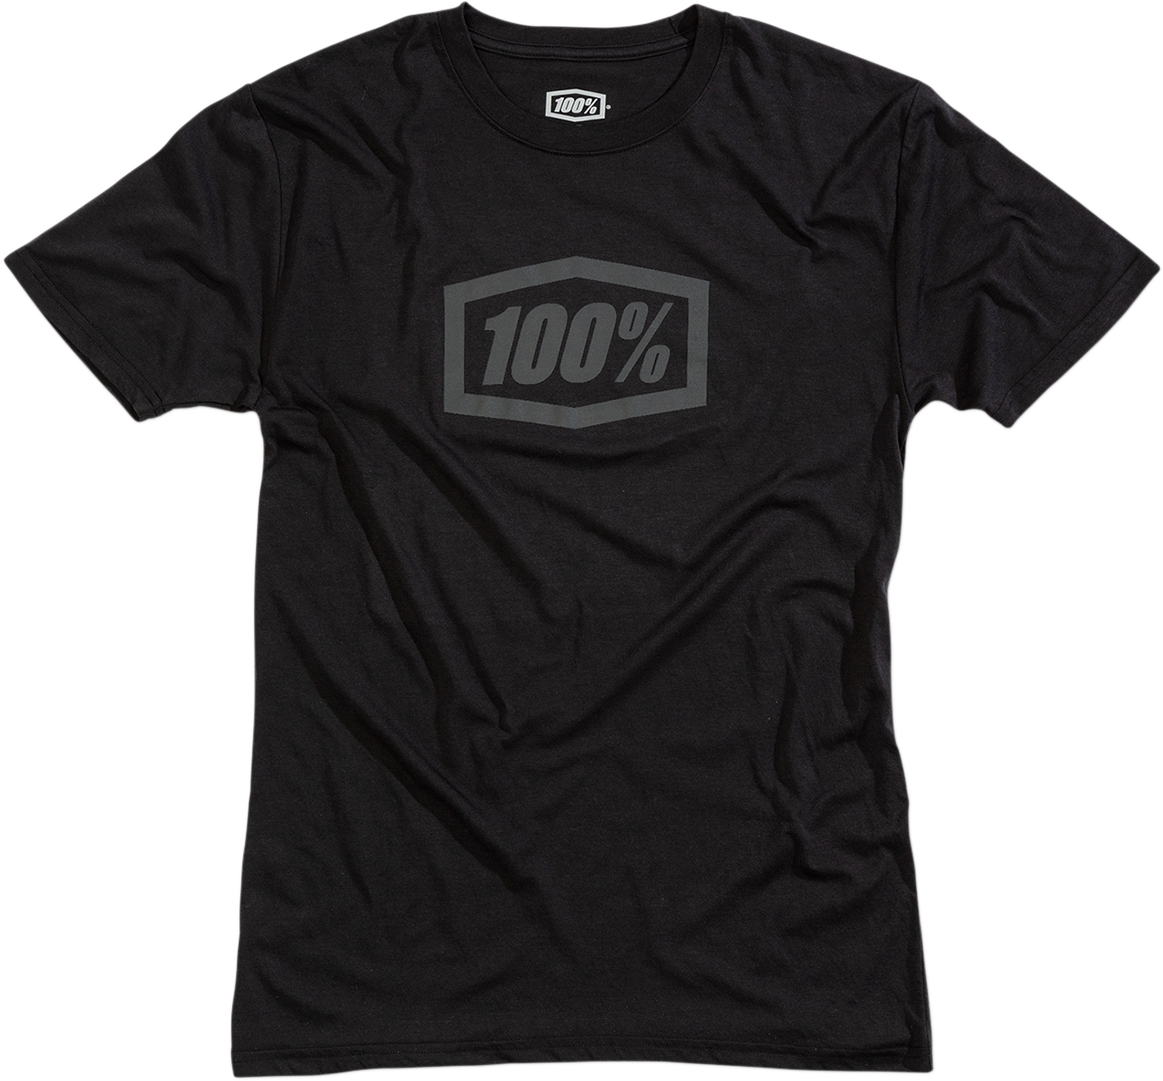 Tech Icon T-Shirt - Black/Gray - Large